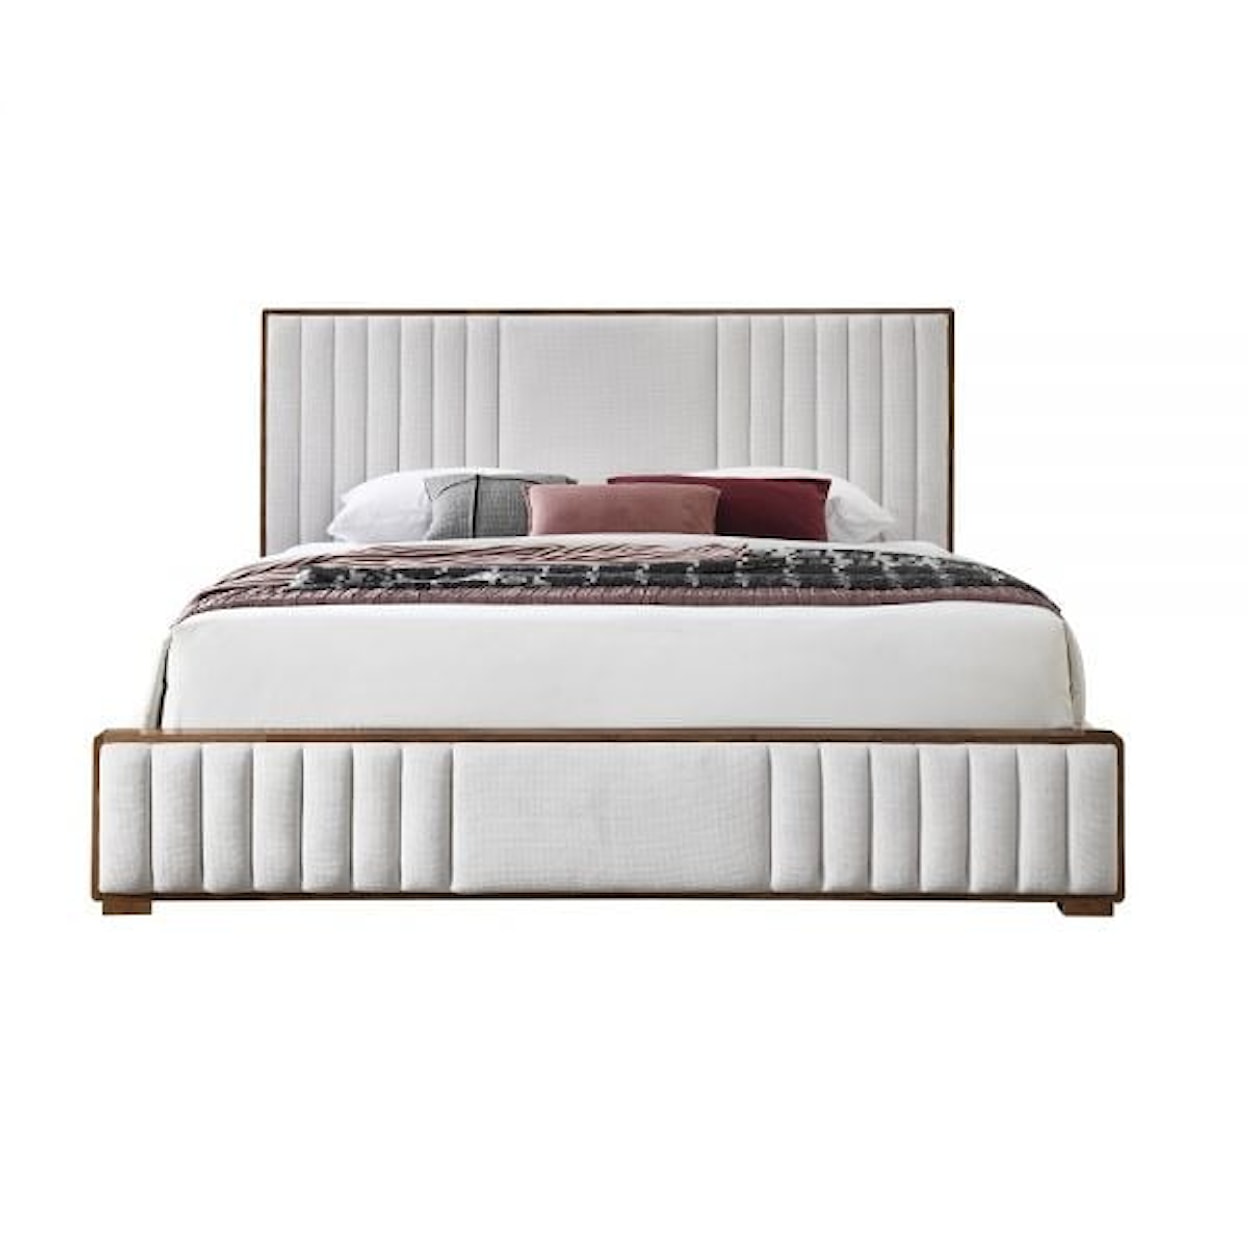 Acme Furniture Kaleea Queen Upholstered Bed